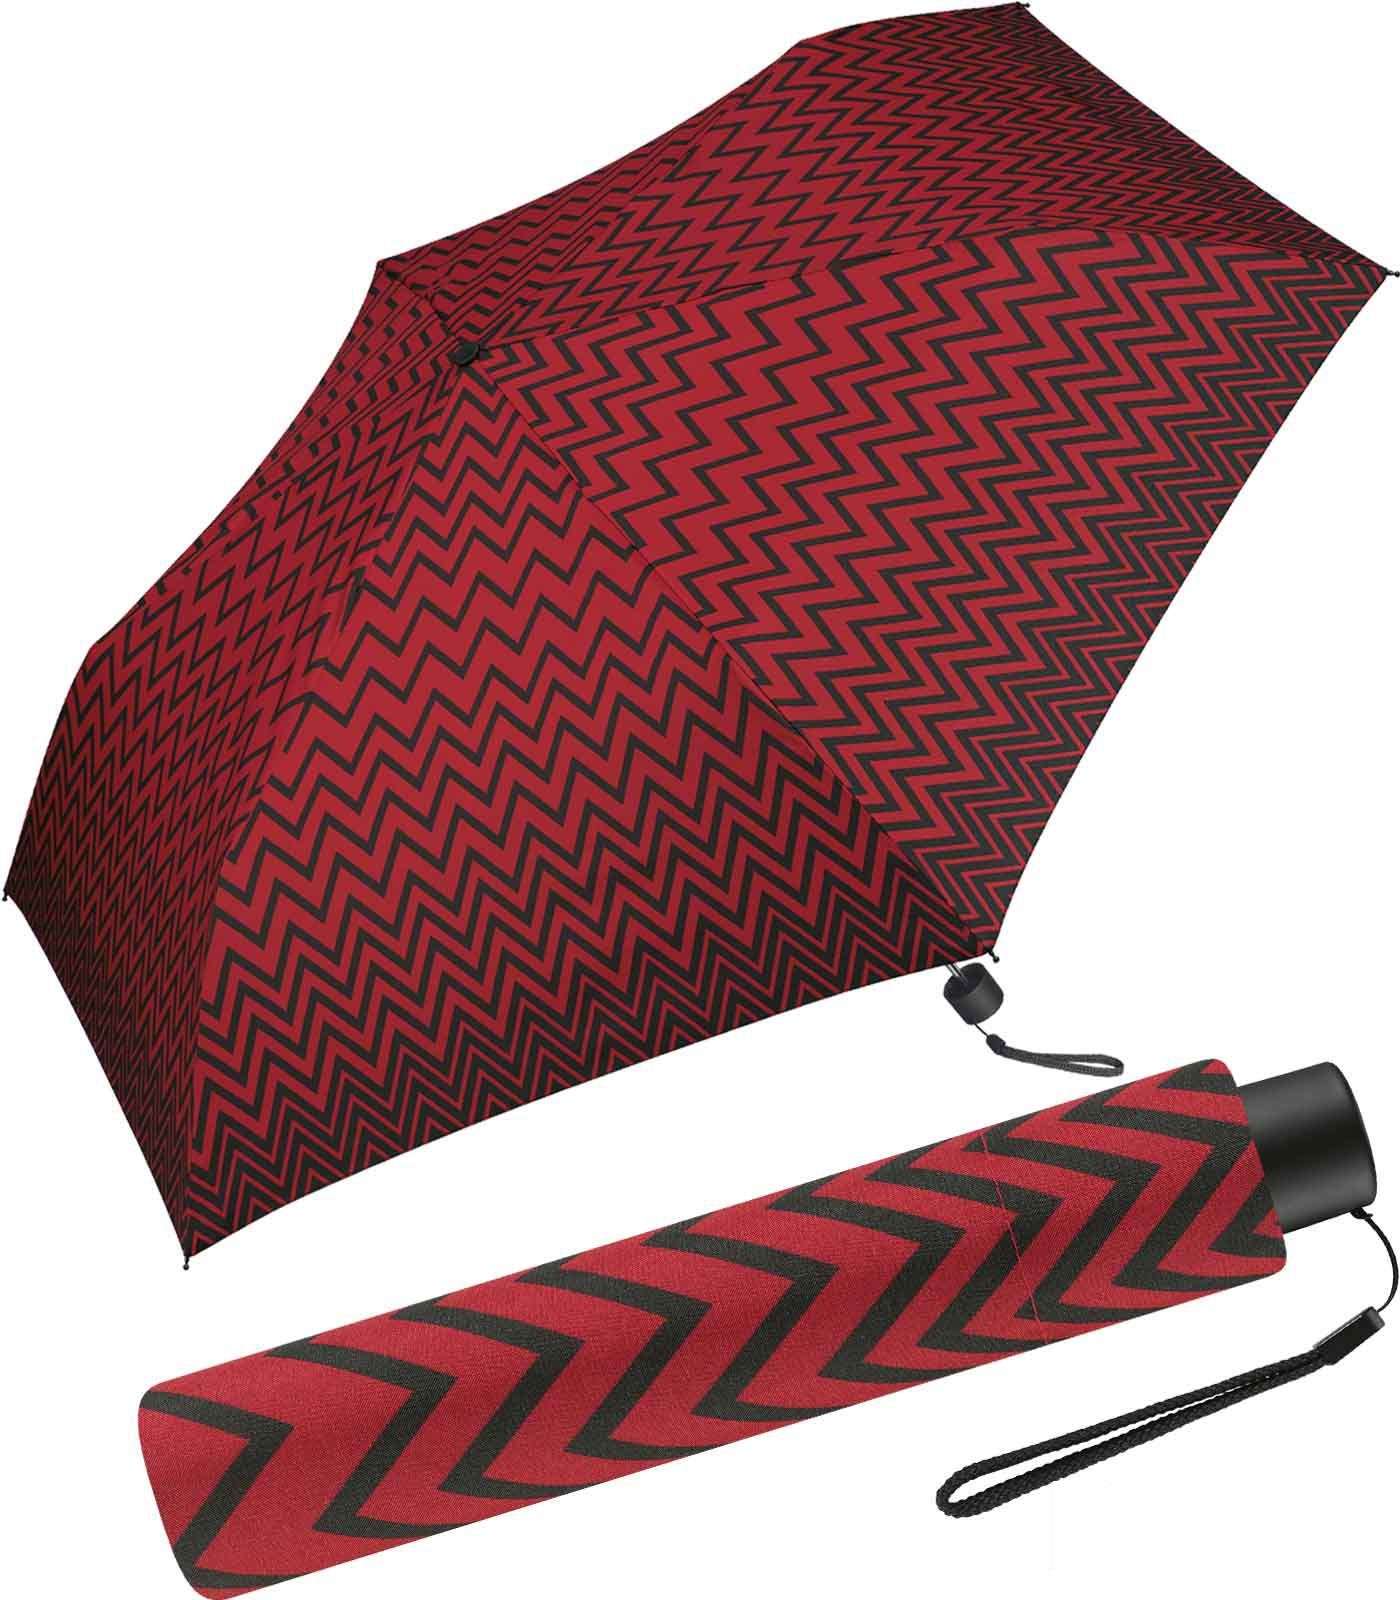 Pierre Cardin Langregenschirm schlanker Damen-Taschenschirm mit Handöffner, mit interessantem geometrischen Zickzack-Muster